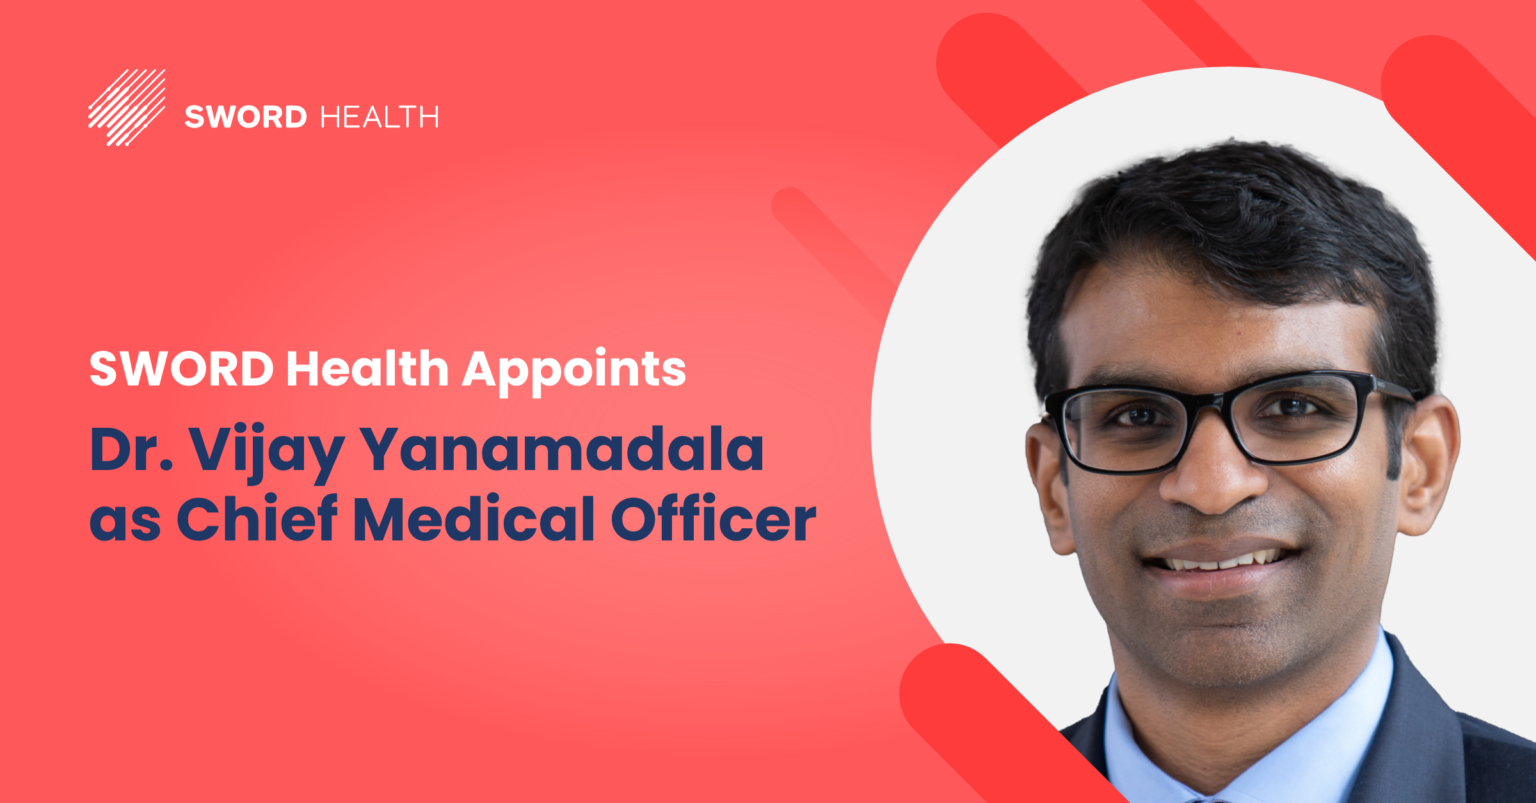 Sword Health appoints Dr. Vijay Yanamadala as Chief Medical Officer